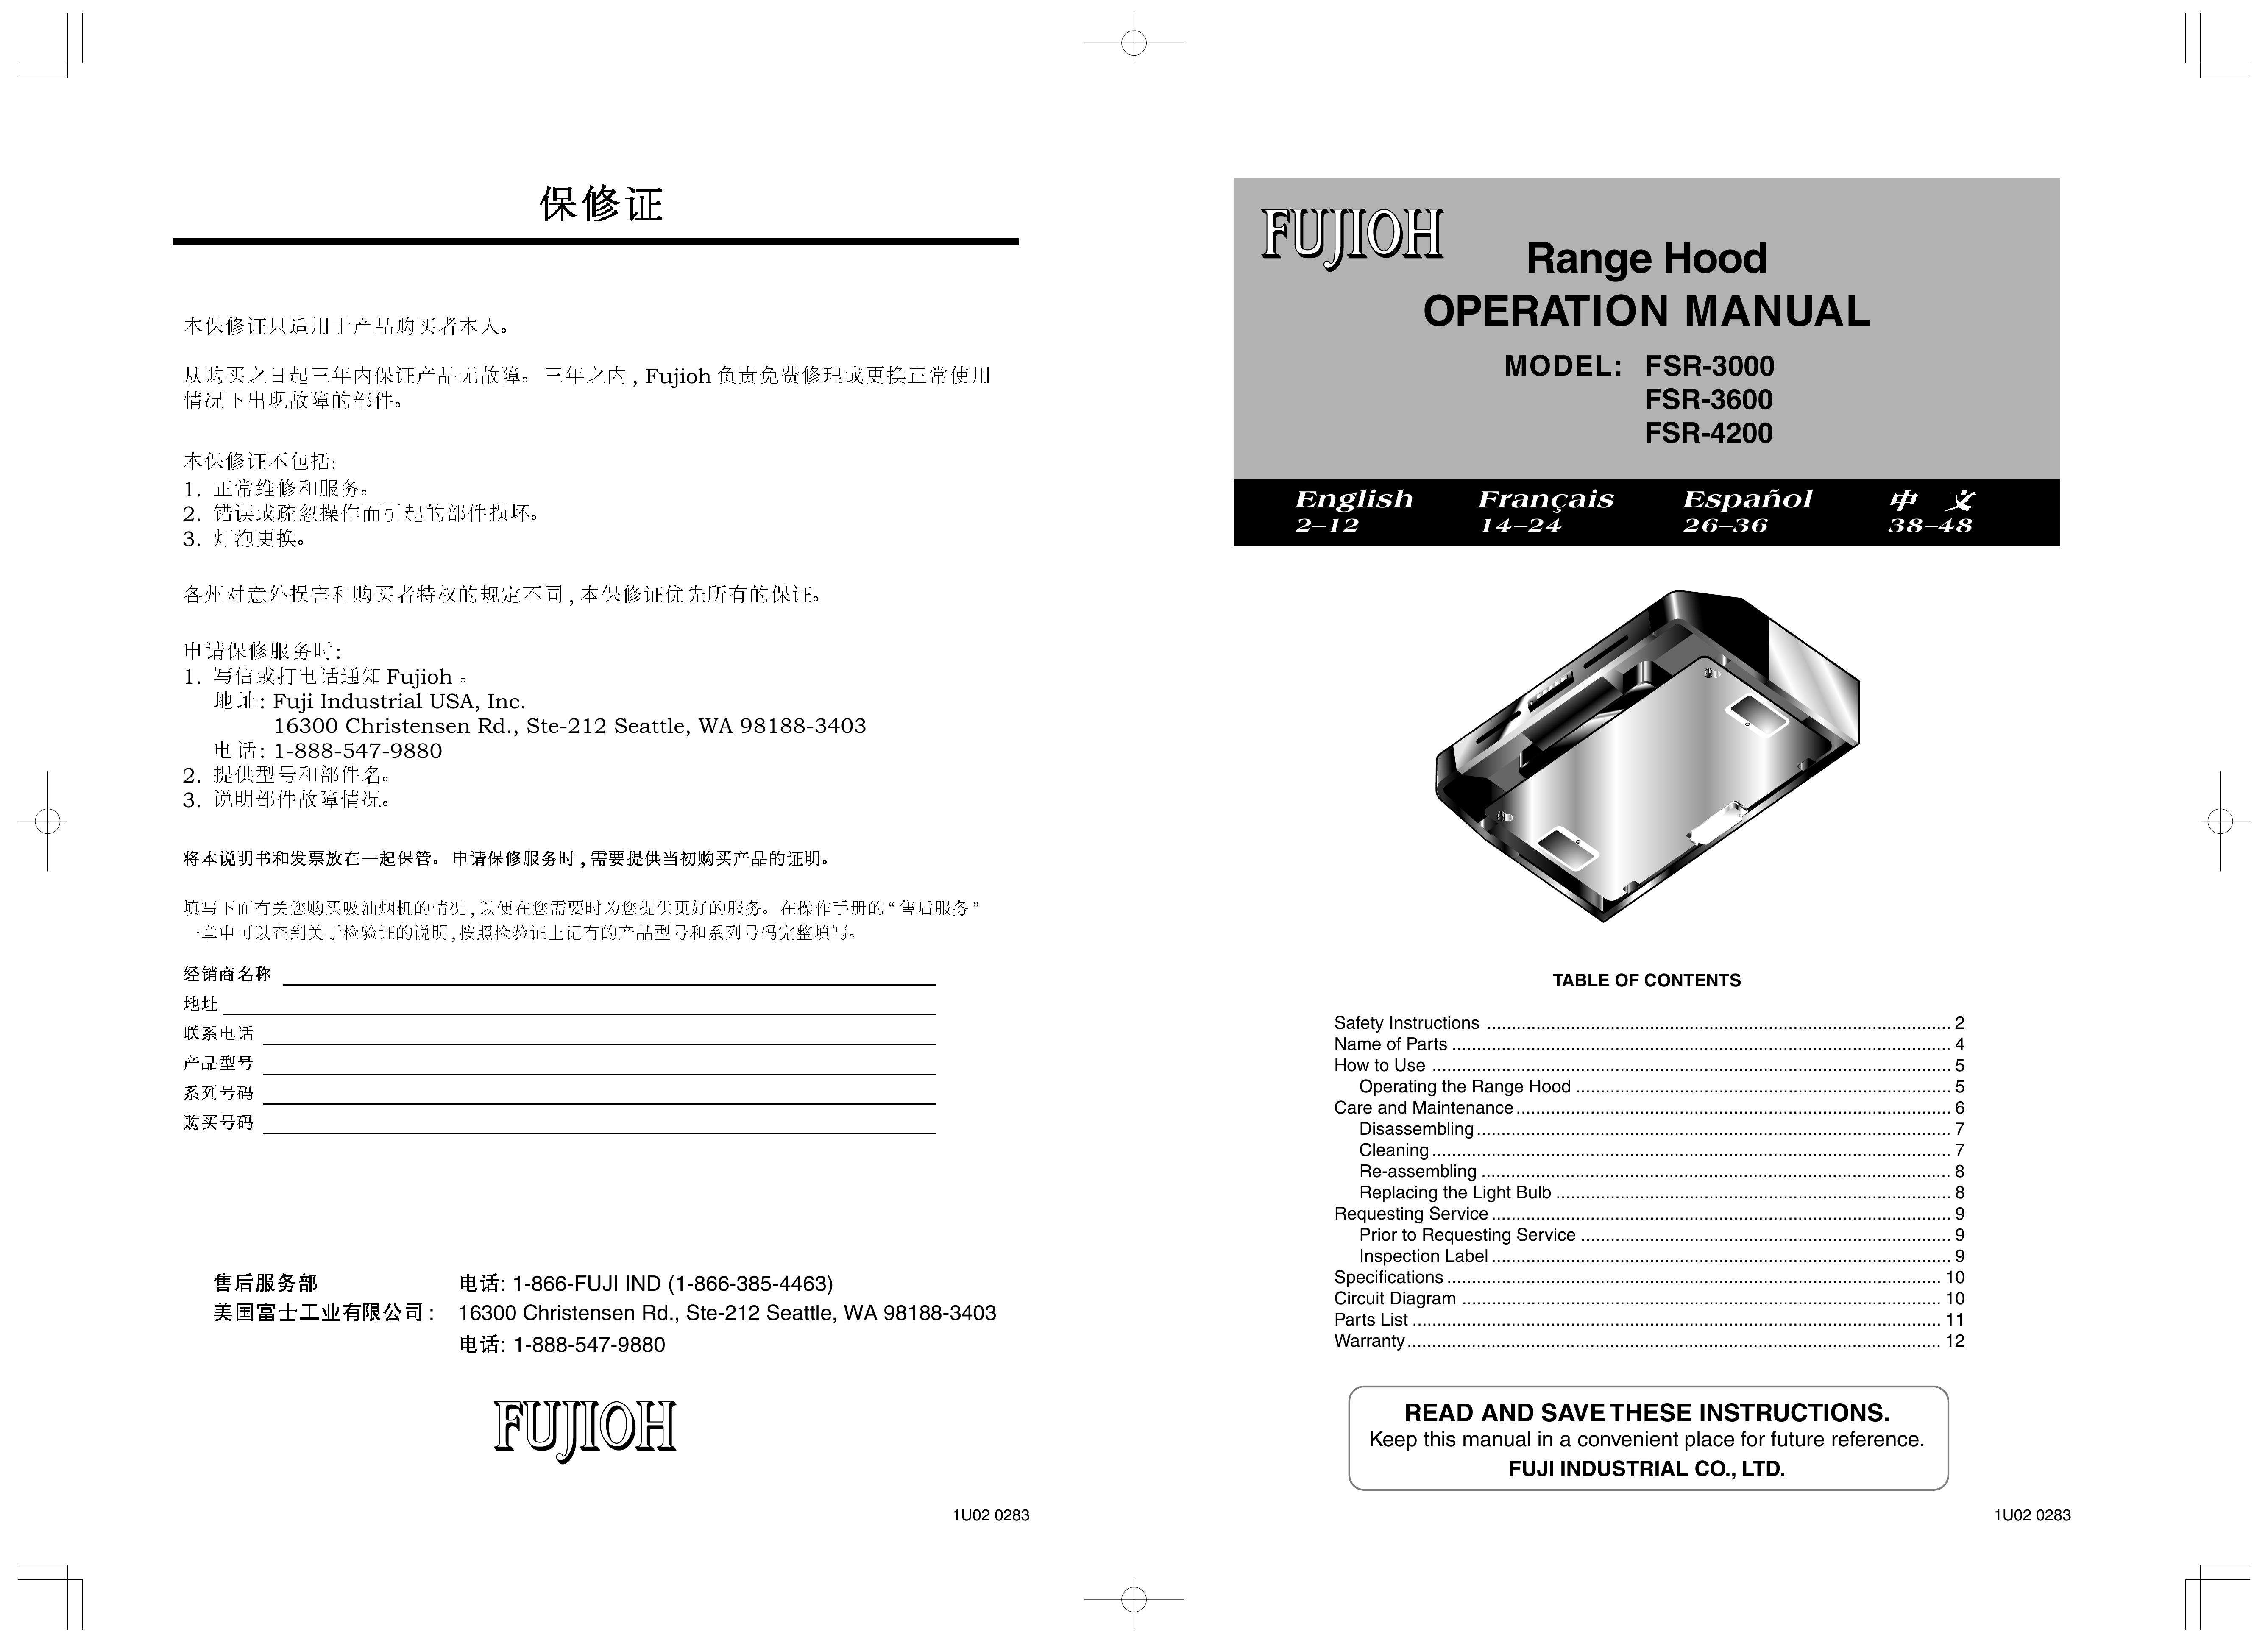 Fujioh FSR-4200 Ventilation Hood User Manual